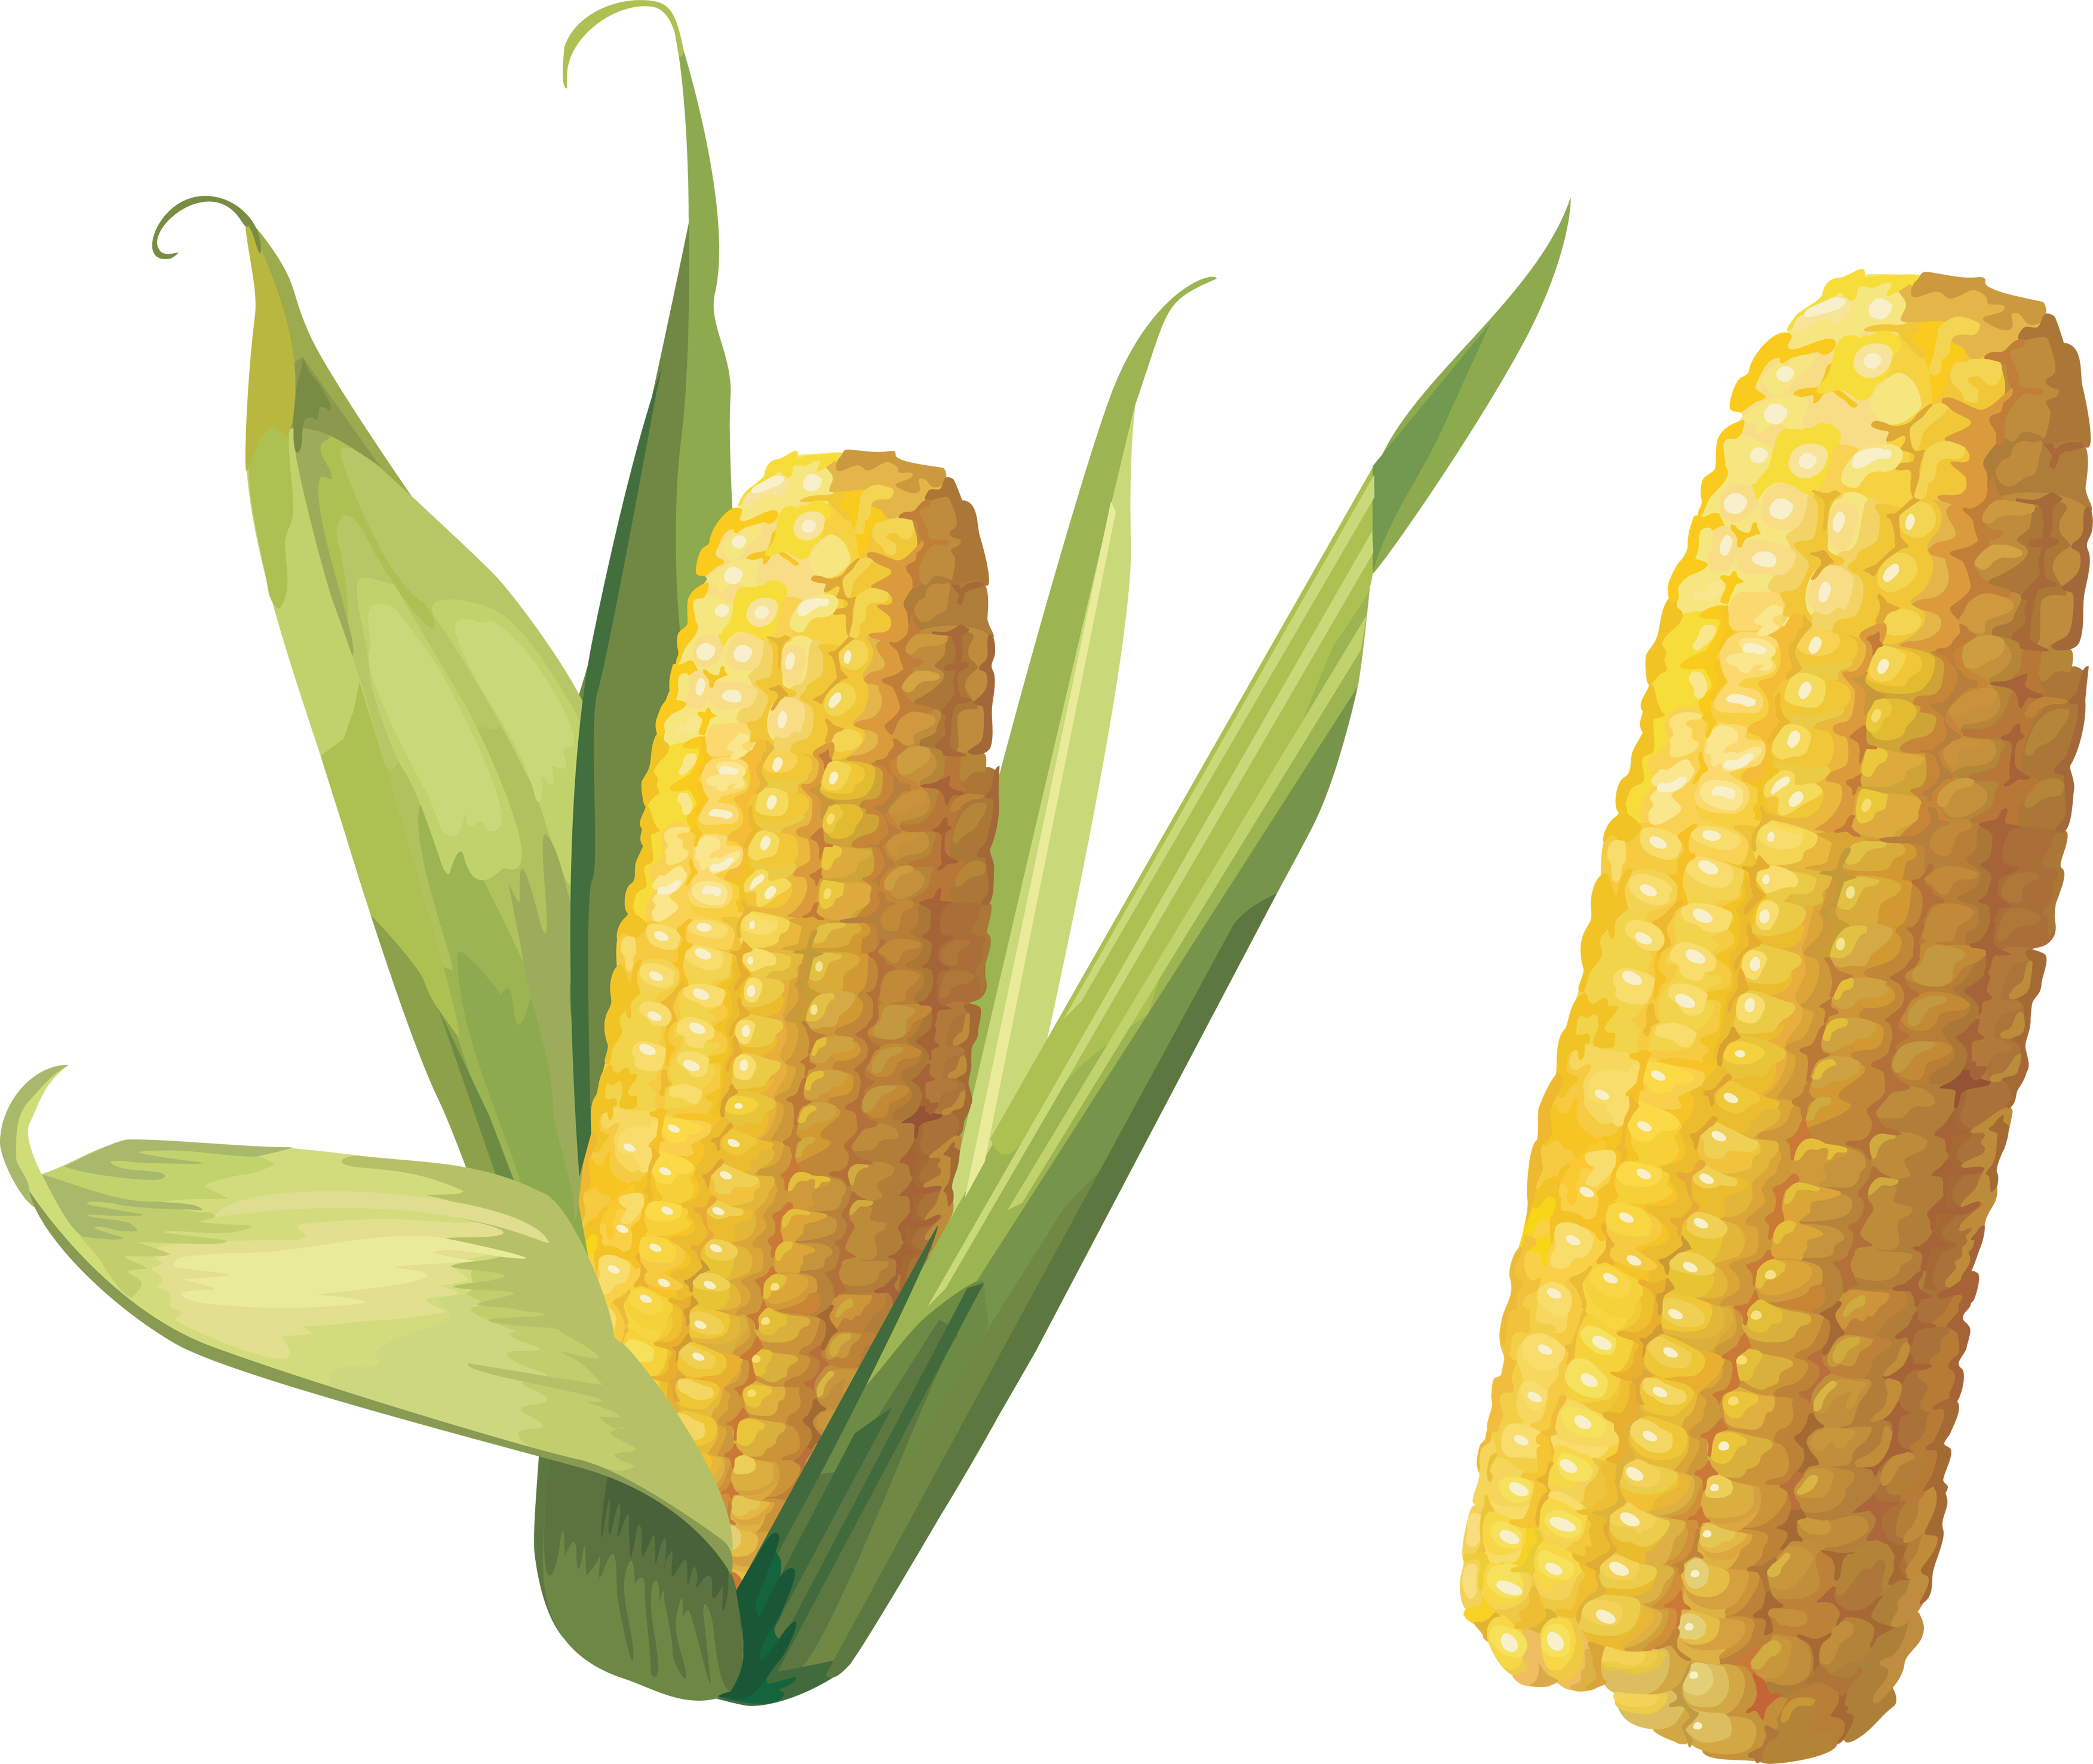 Corn farm food